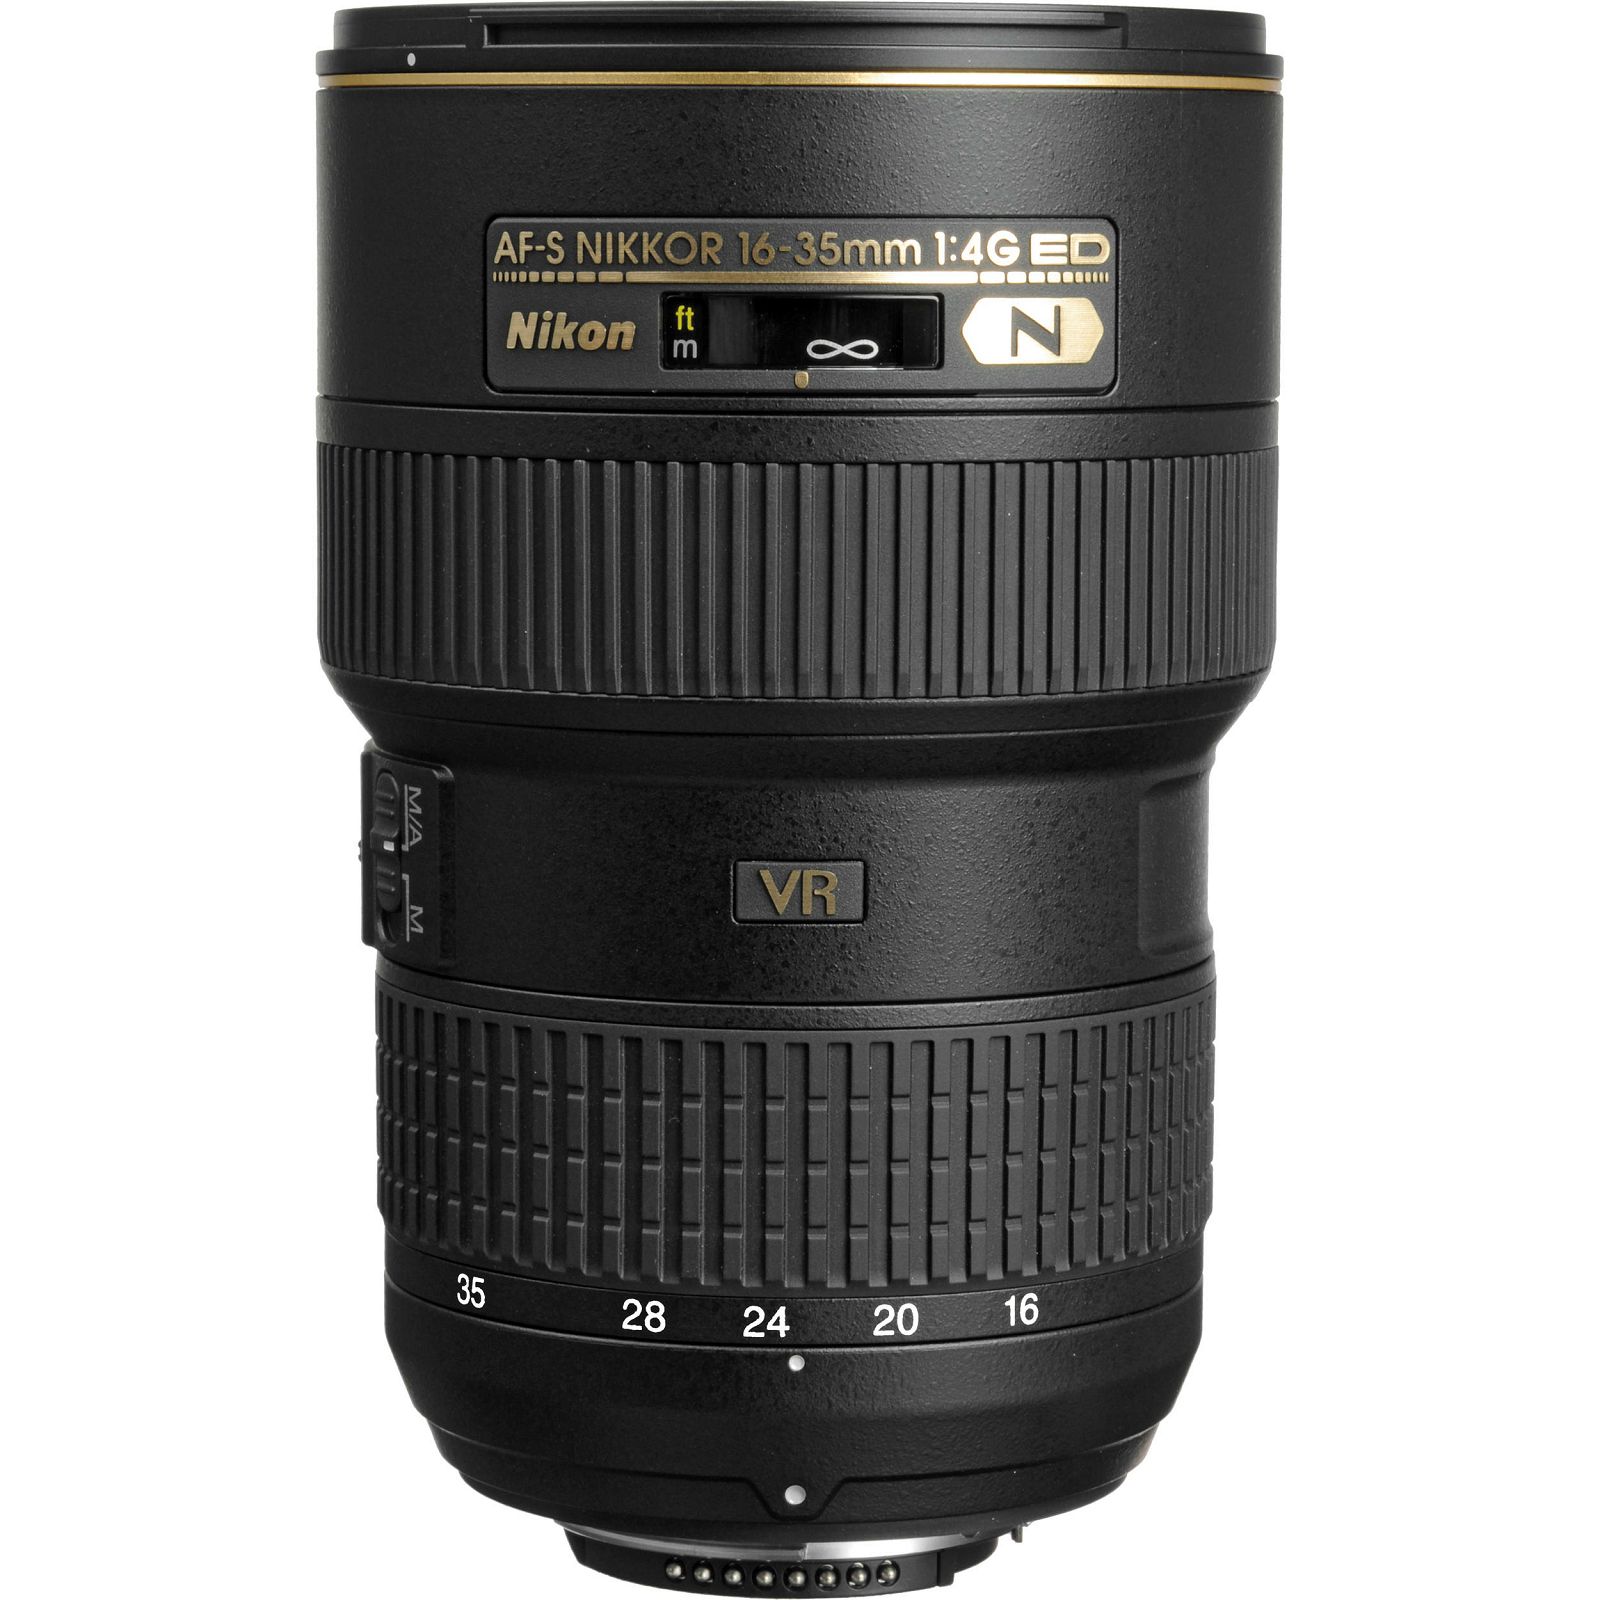 Nikon AF-S 16-35mm f/4G ED VR FX širokokutni objektiv Nikkor 16-35 f4 G Professional auto focus wide angle zoom lens (JAA806DA)